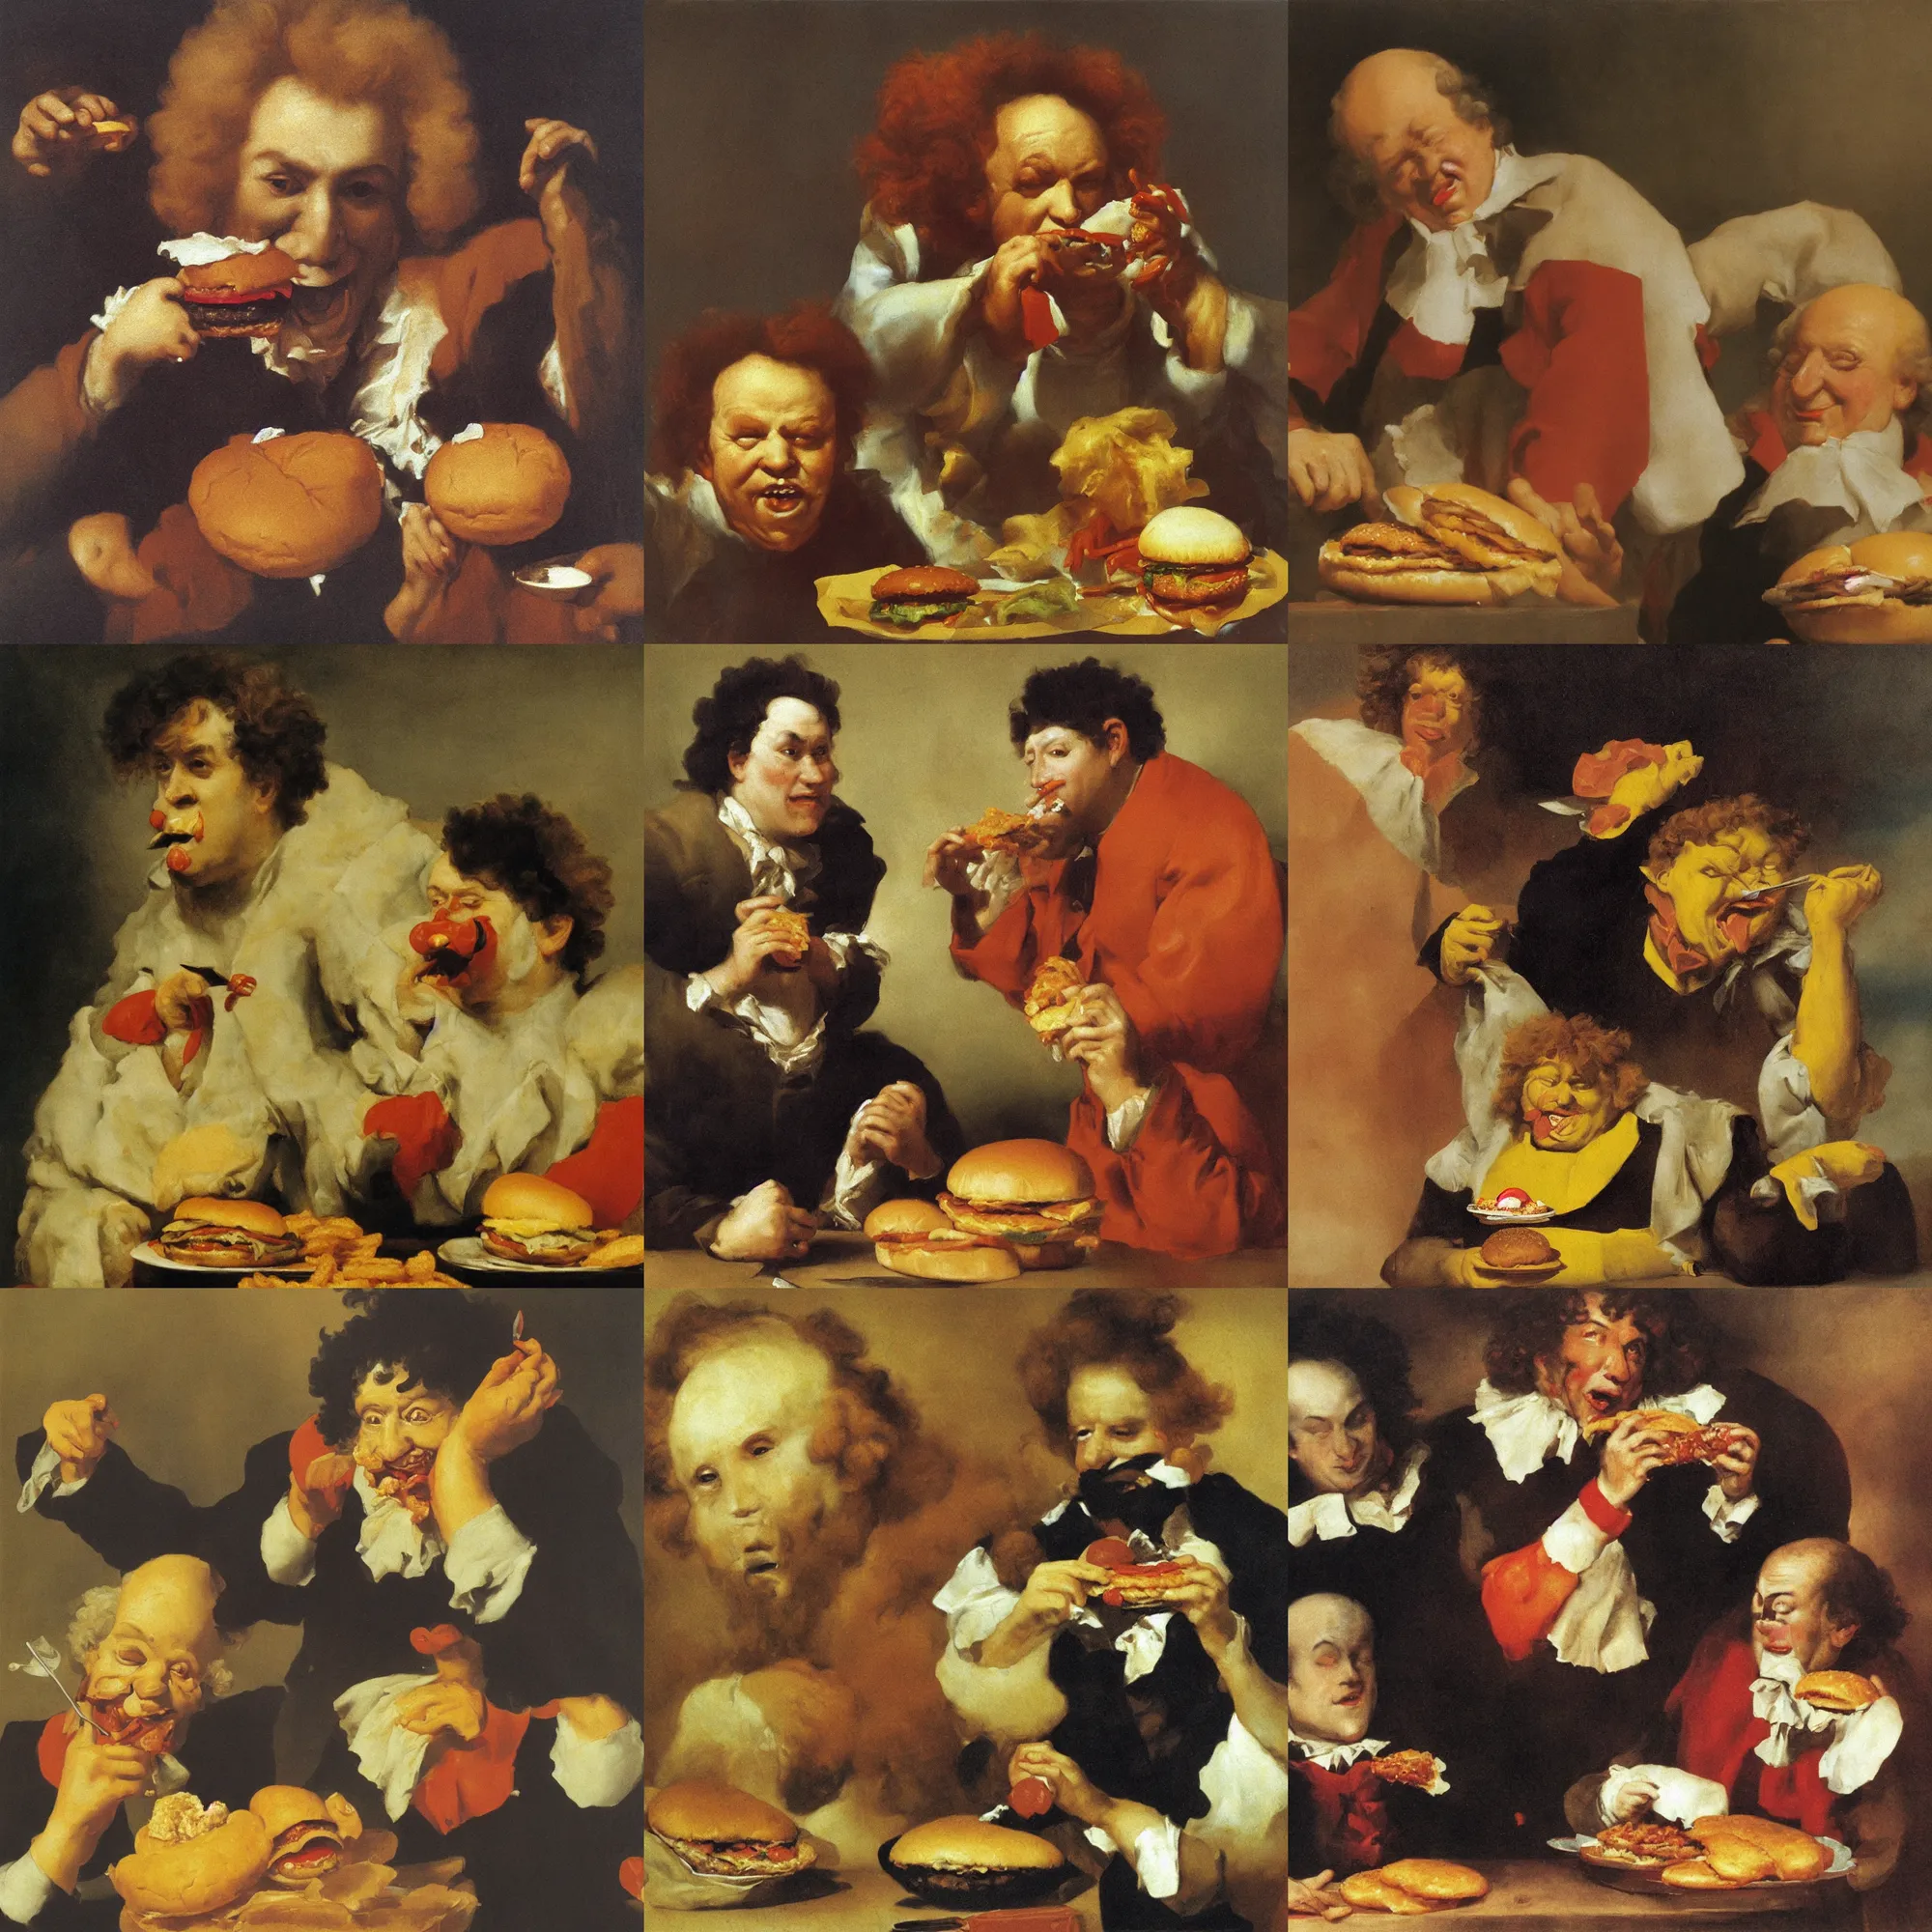 Prompt: ronald mcdonald eating a hamburger, painting by fransisco goya